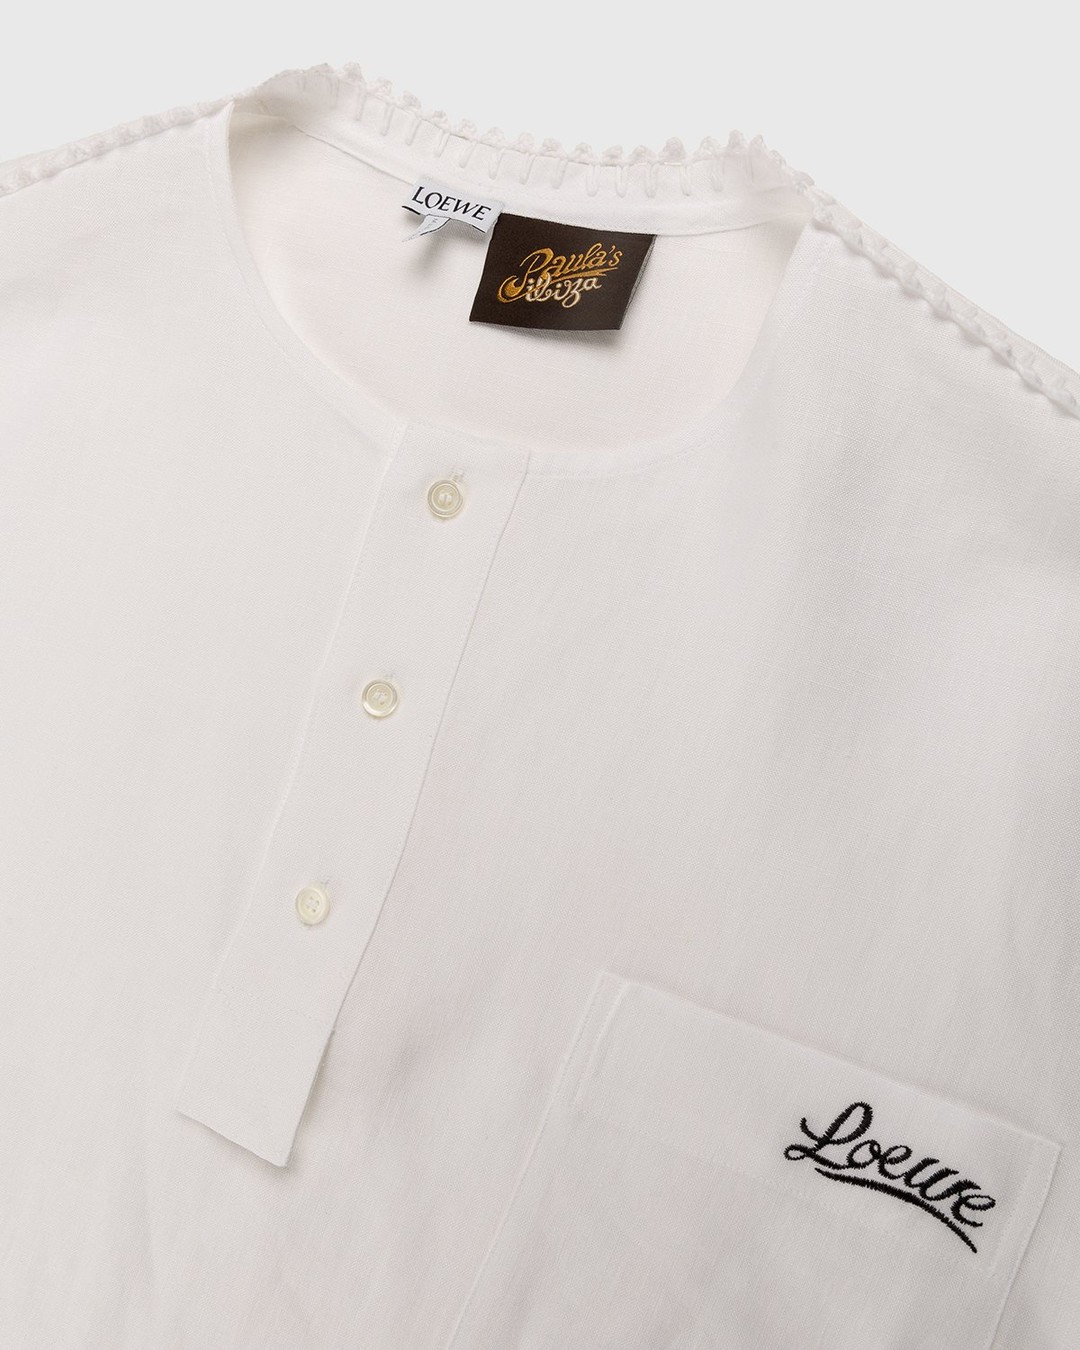 Loewe – Paula's Ibiza Buttoned Pullover Shirt White - Shirts - White - Image 4